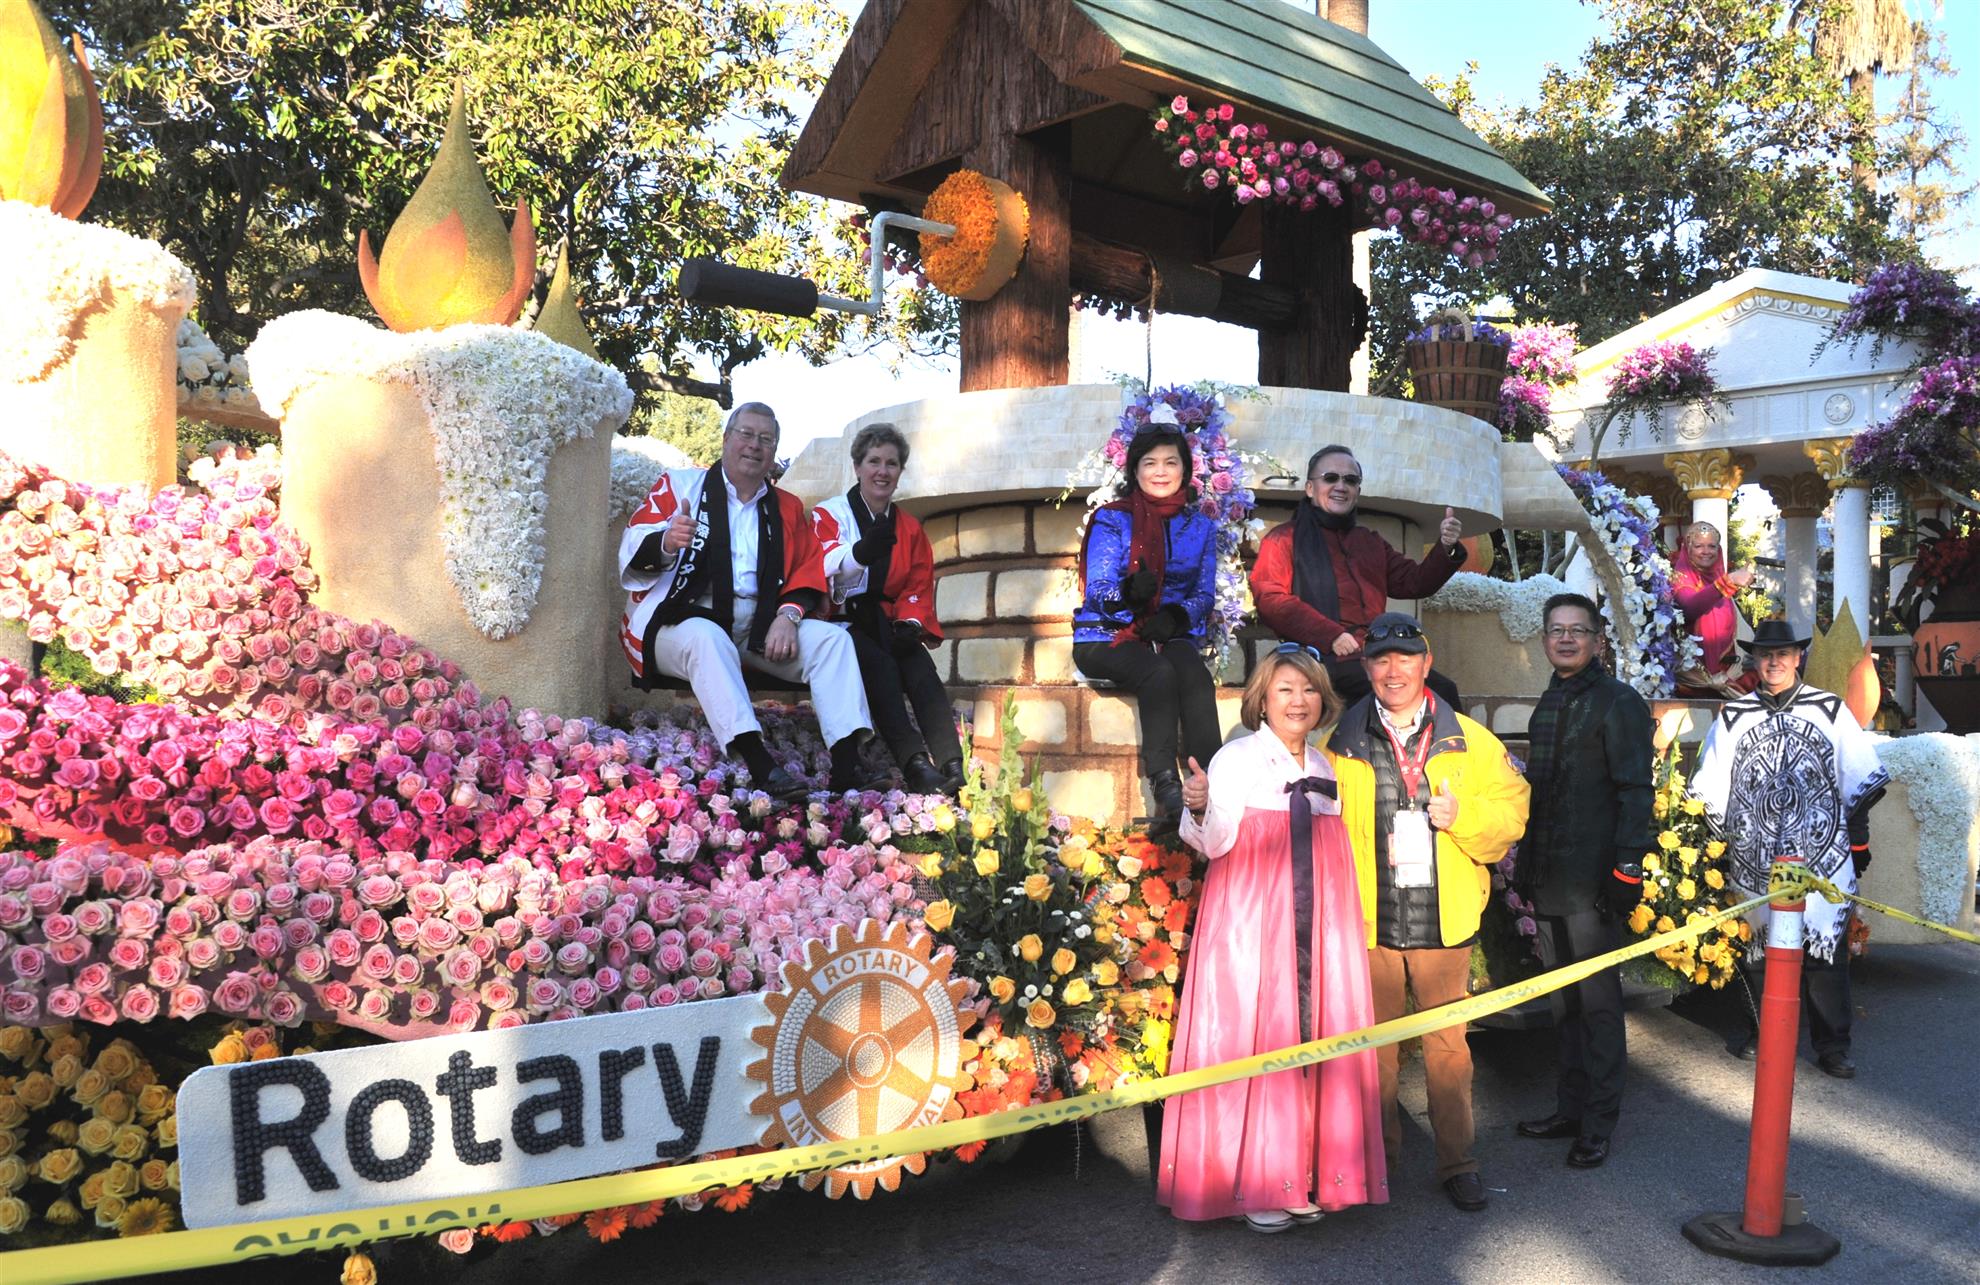 Rotary float 2015 Rose Parade